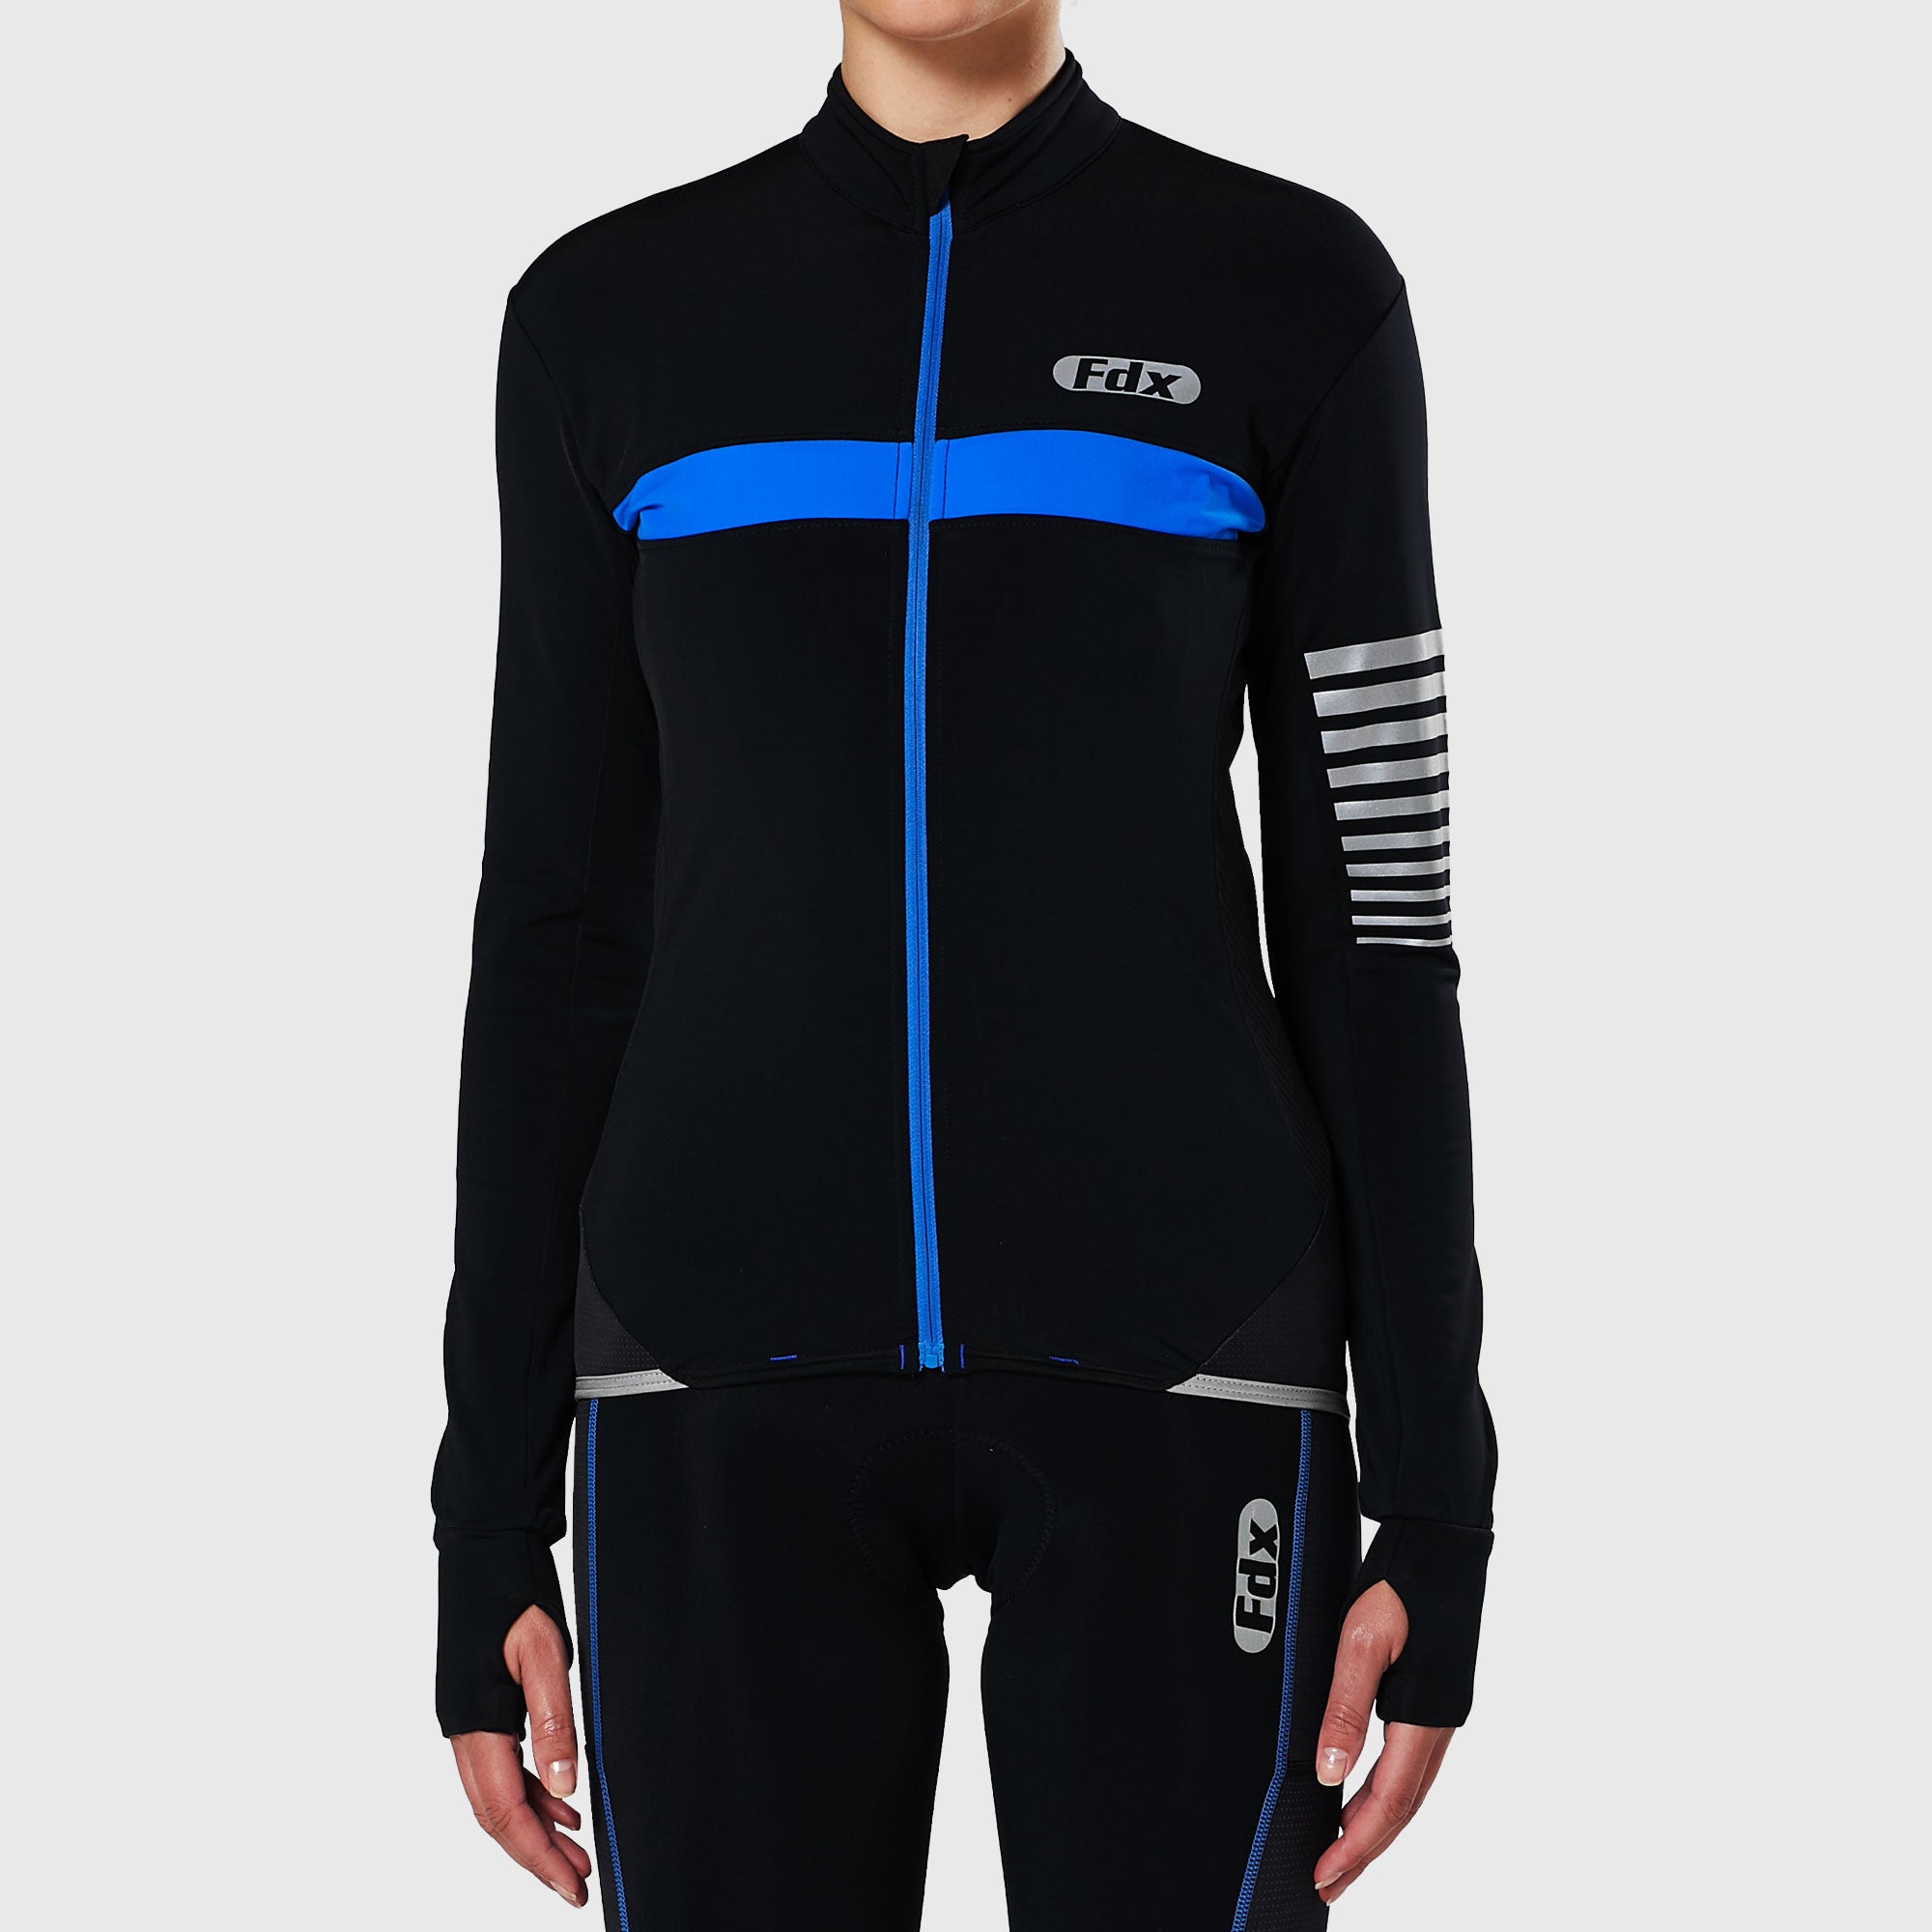 Fdx Best Women's Black & Blue Long Sleeve Cycling Jersey for Winter Roubaix Thermal Fleece Shirt Road Bike Wear Top Full Zipper, Lightweight  Pockets & Hi viz Reflectors - All Day